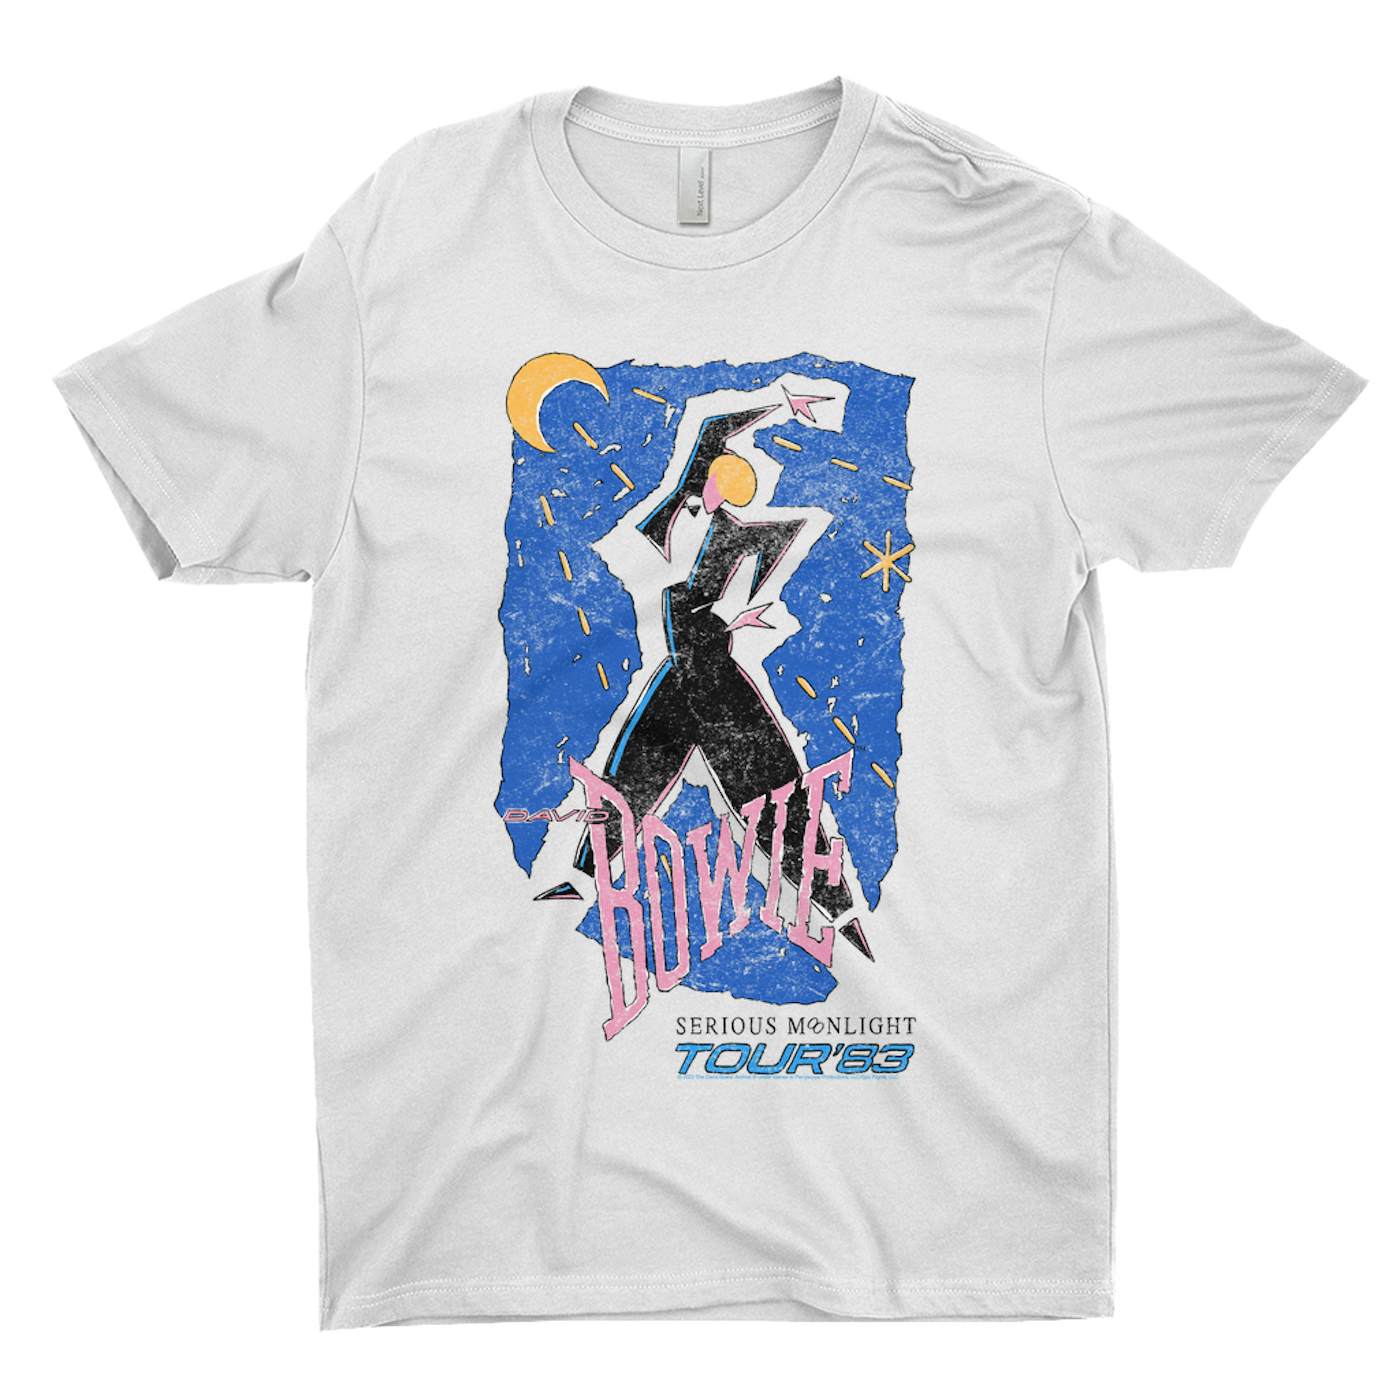 David Bowie T-Shirt | Serious Moonlight Tour 1984 Sketched (Merchbar Exclusive) David Bowie Shirt